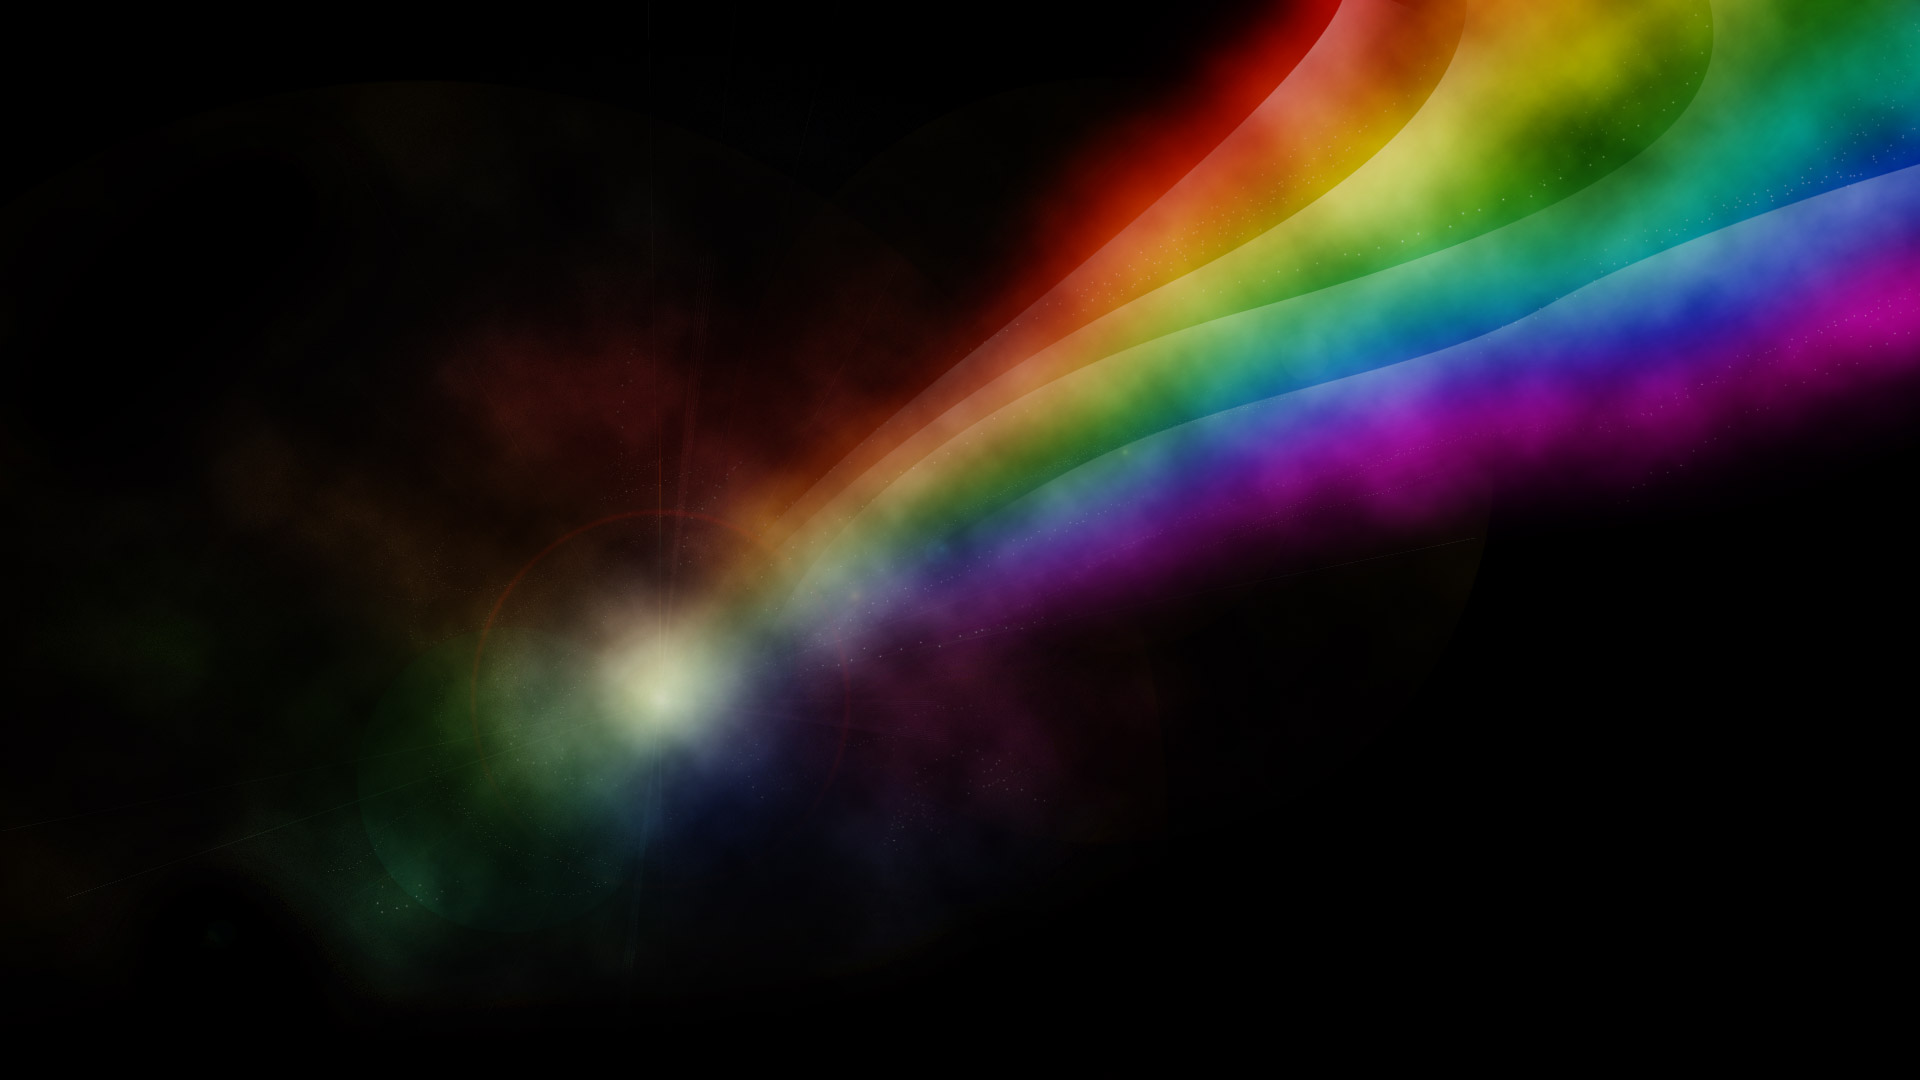 beautiful hd rainbow image